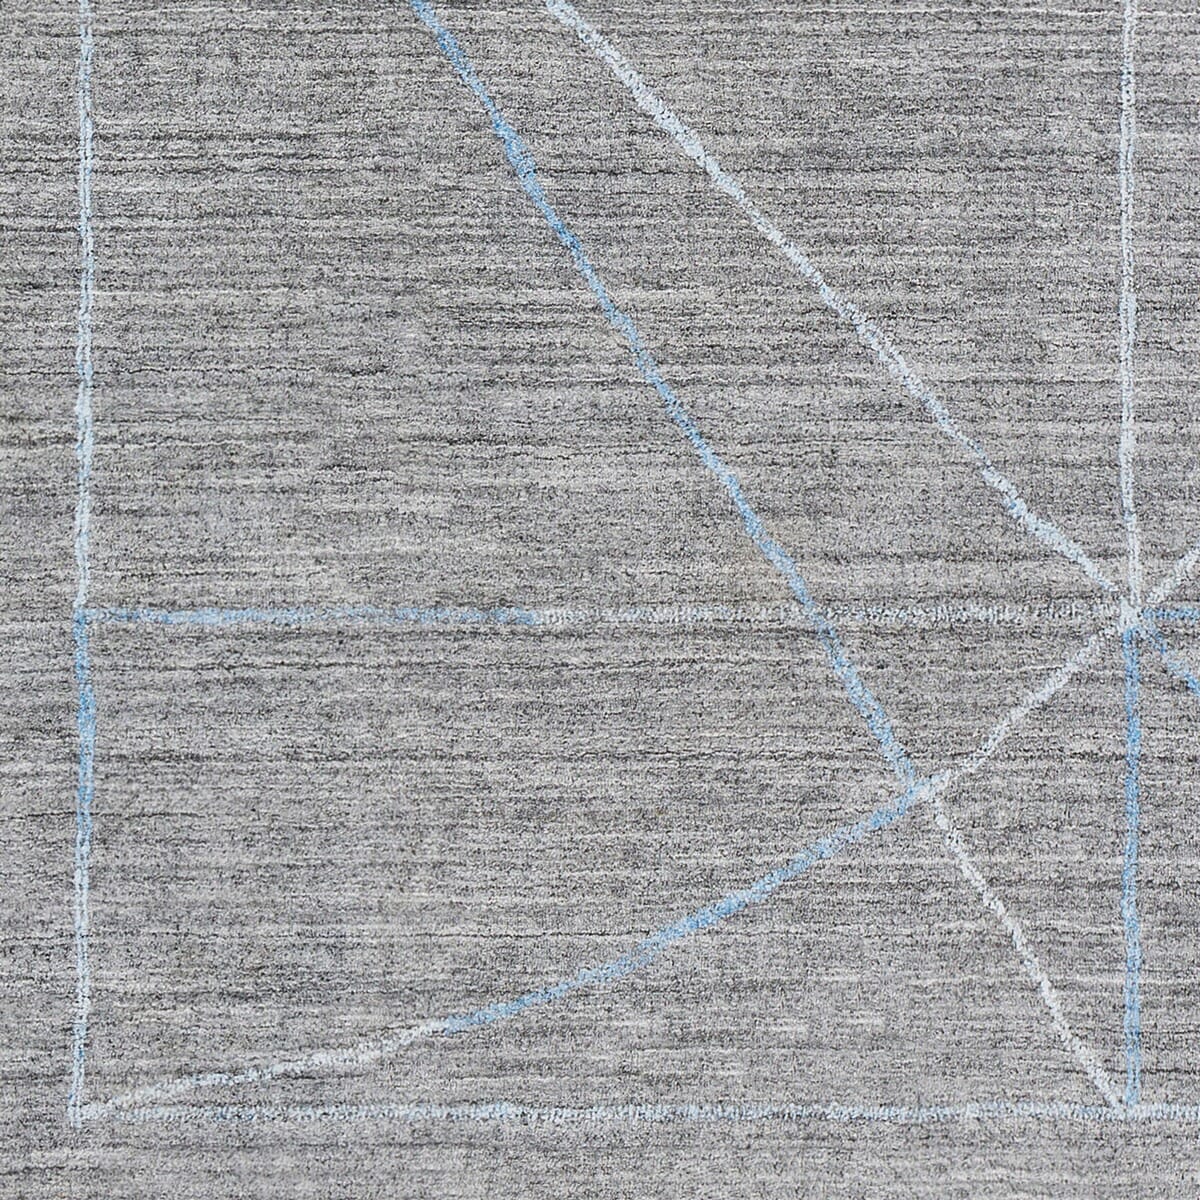 Surya Hightower Htw-3009 Medium Gray, Charcoal, White, Taupe Geometric Area Rug